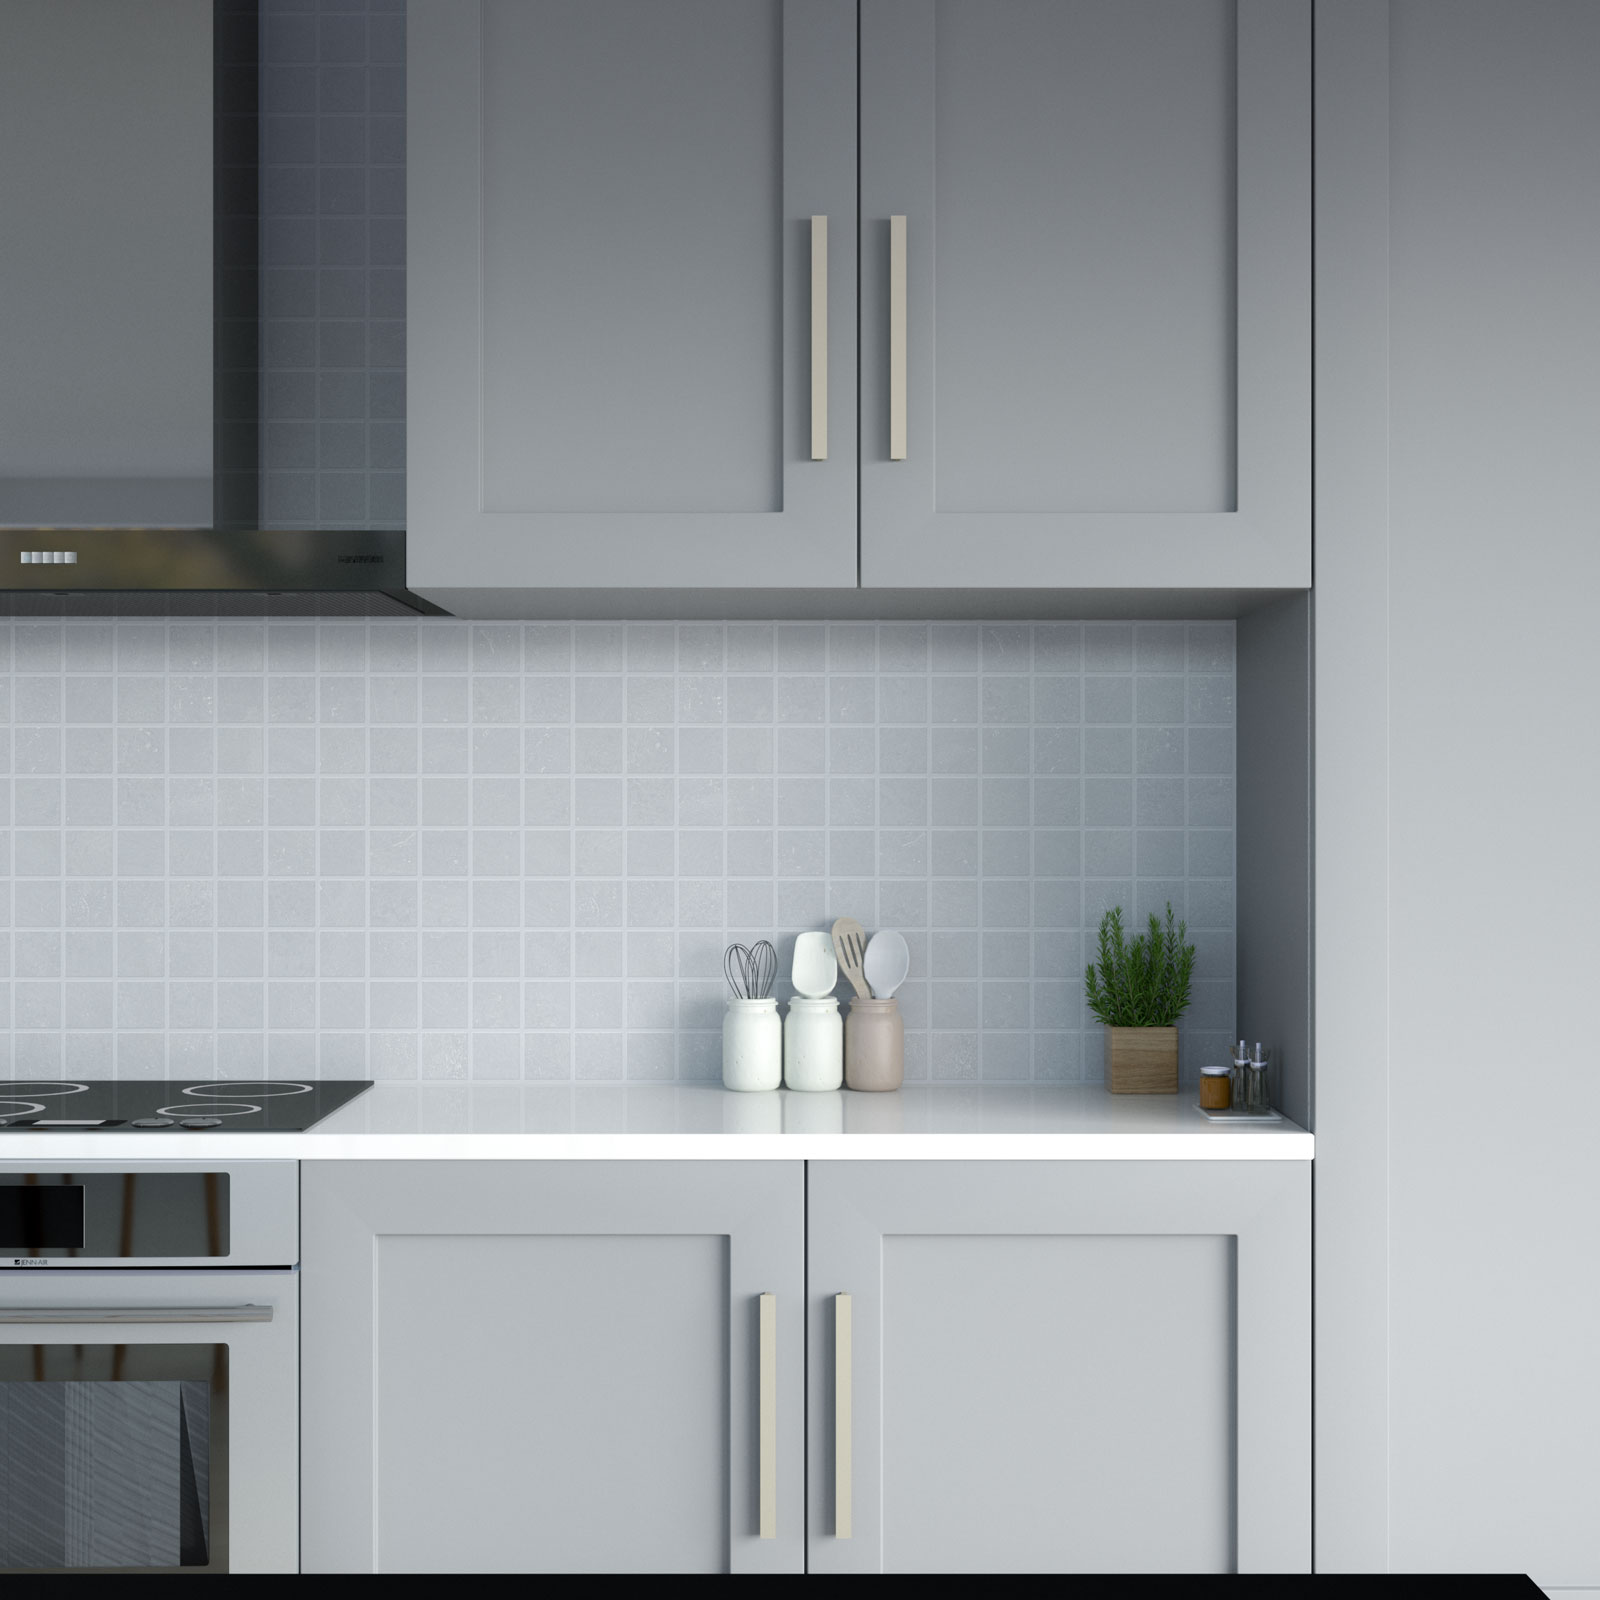 Plain white quartz countertops with gray cabinets